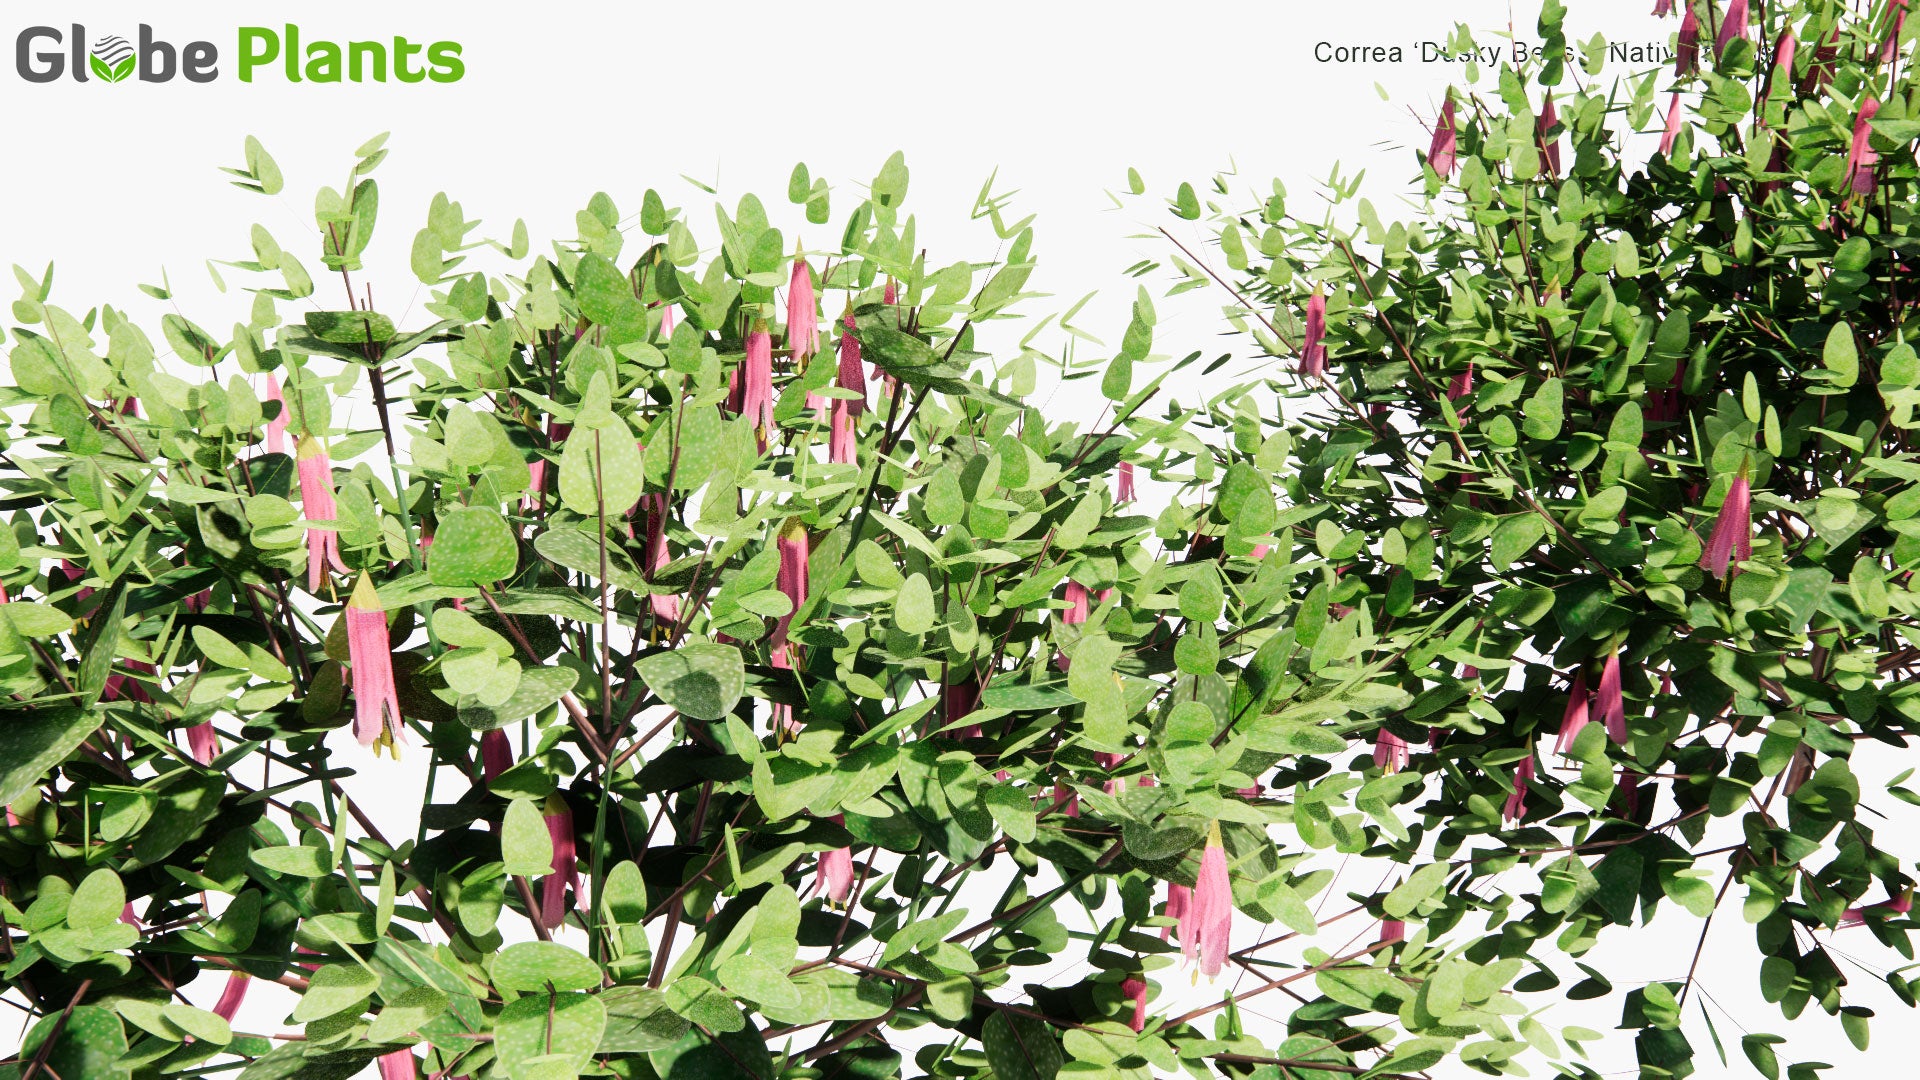 Low Poly Correa 'Dusky Bells' - Native Fuchsia (3D Model)